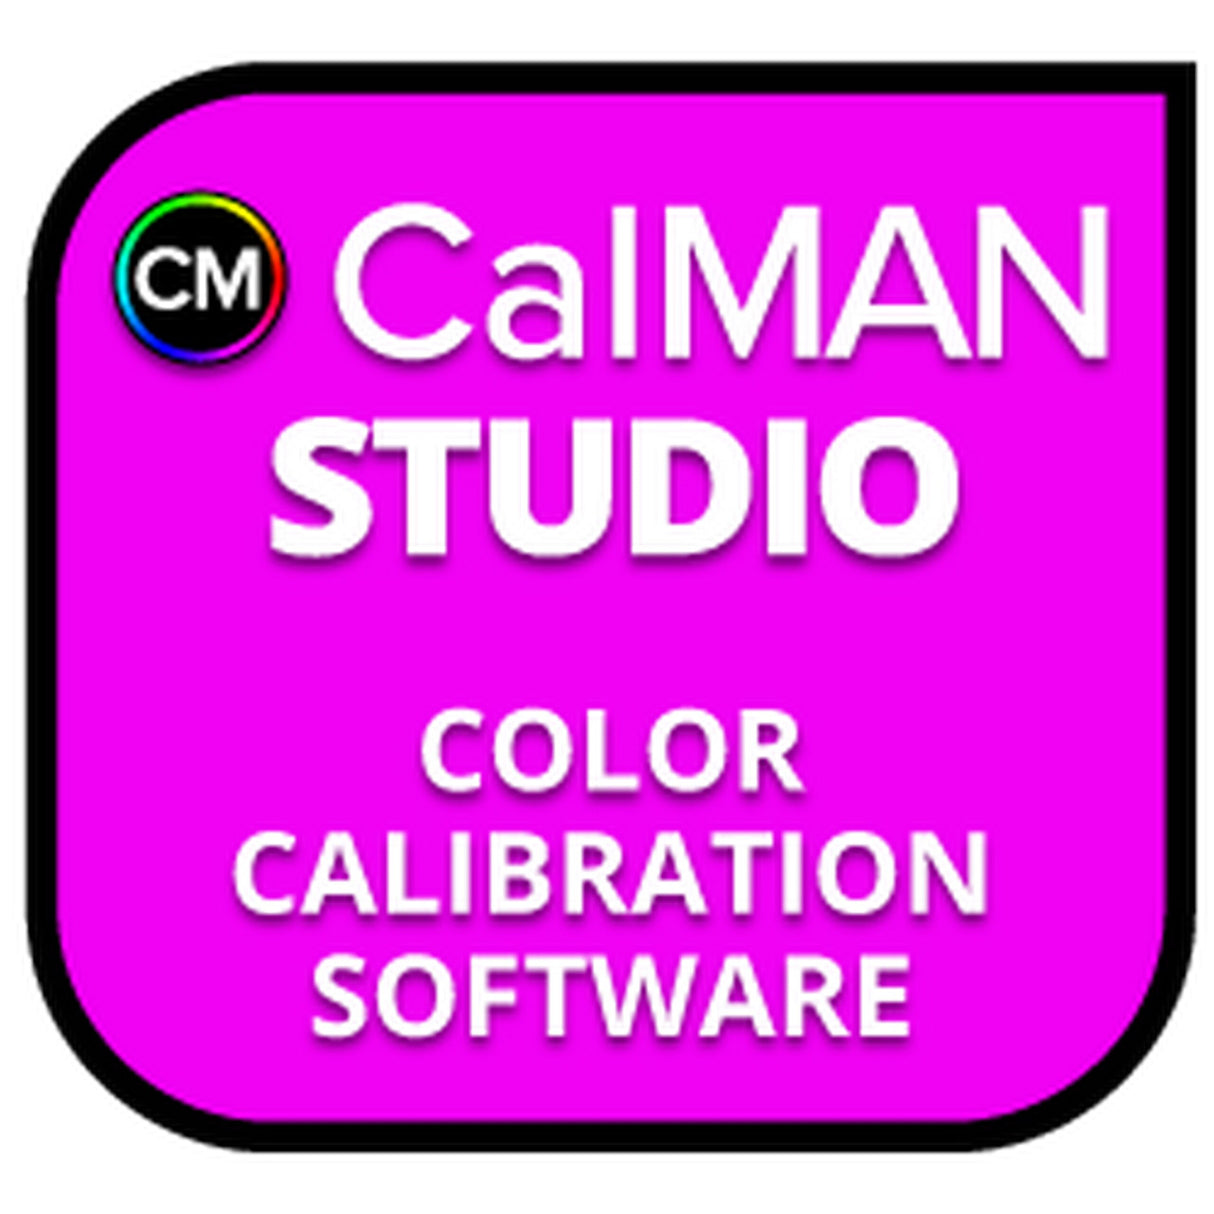 SpectraCal CalMAN Studio Color Calibration Software, Download Only